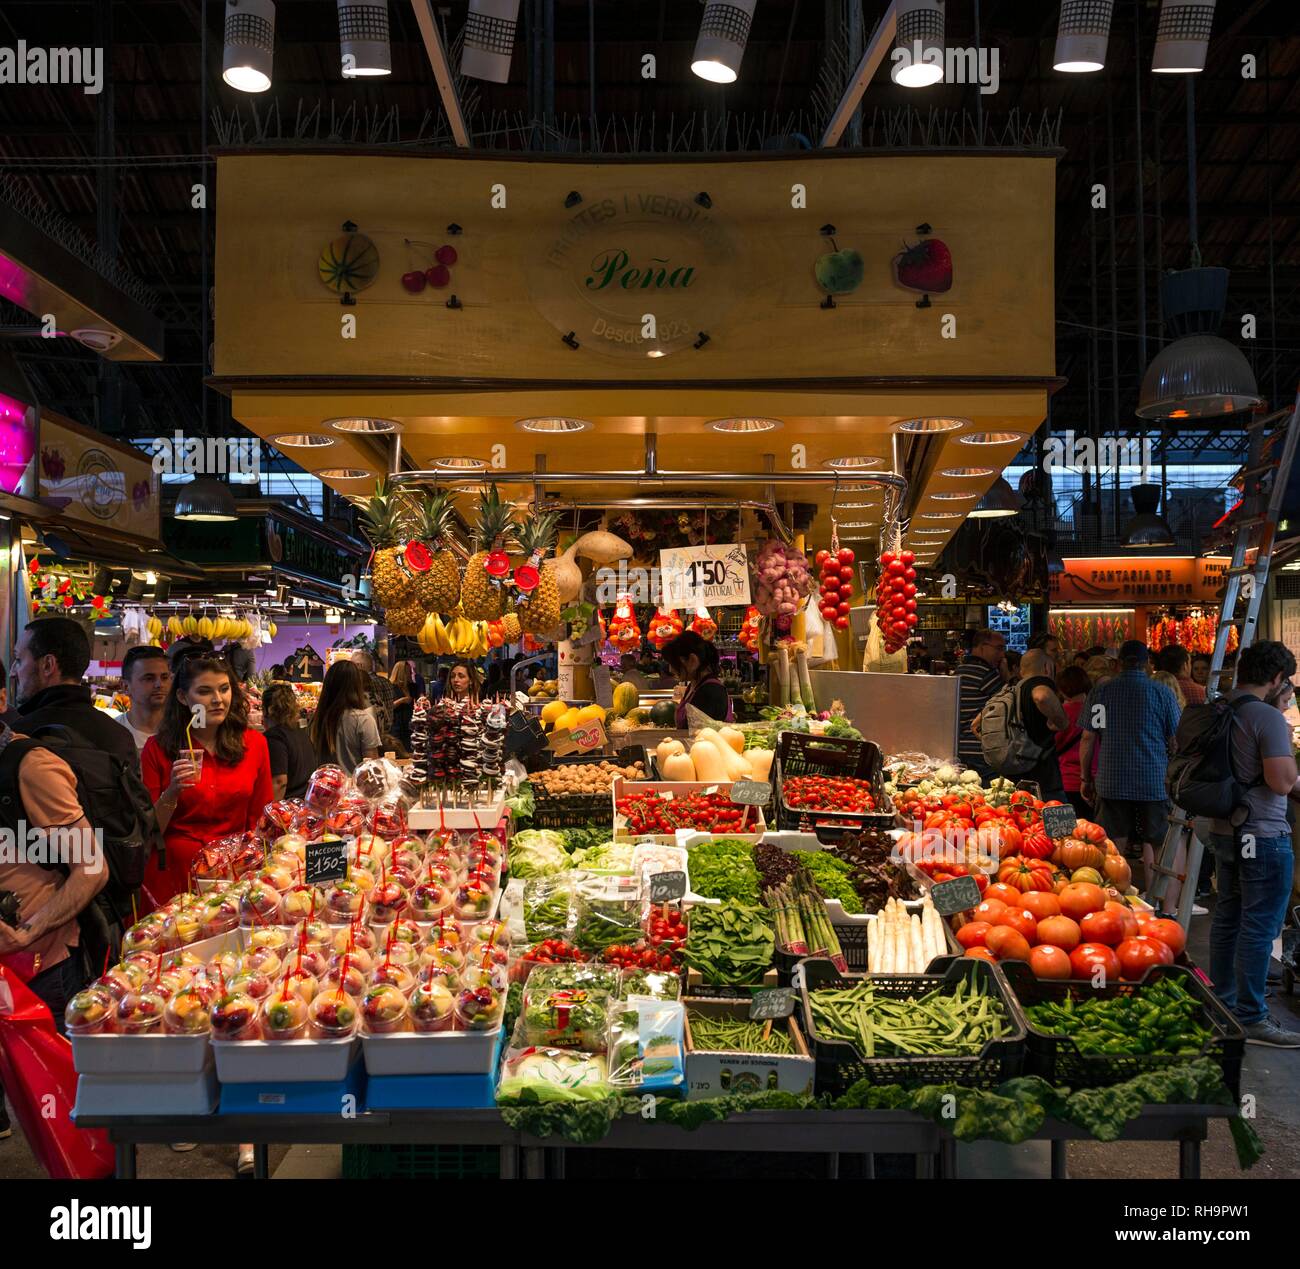 Stand with fruits and vegetables, Mercat de la Boqueria or Mercat de Sant Josep, market halls, Barcelona, Spain Stock Photo